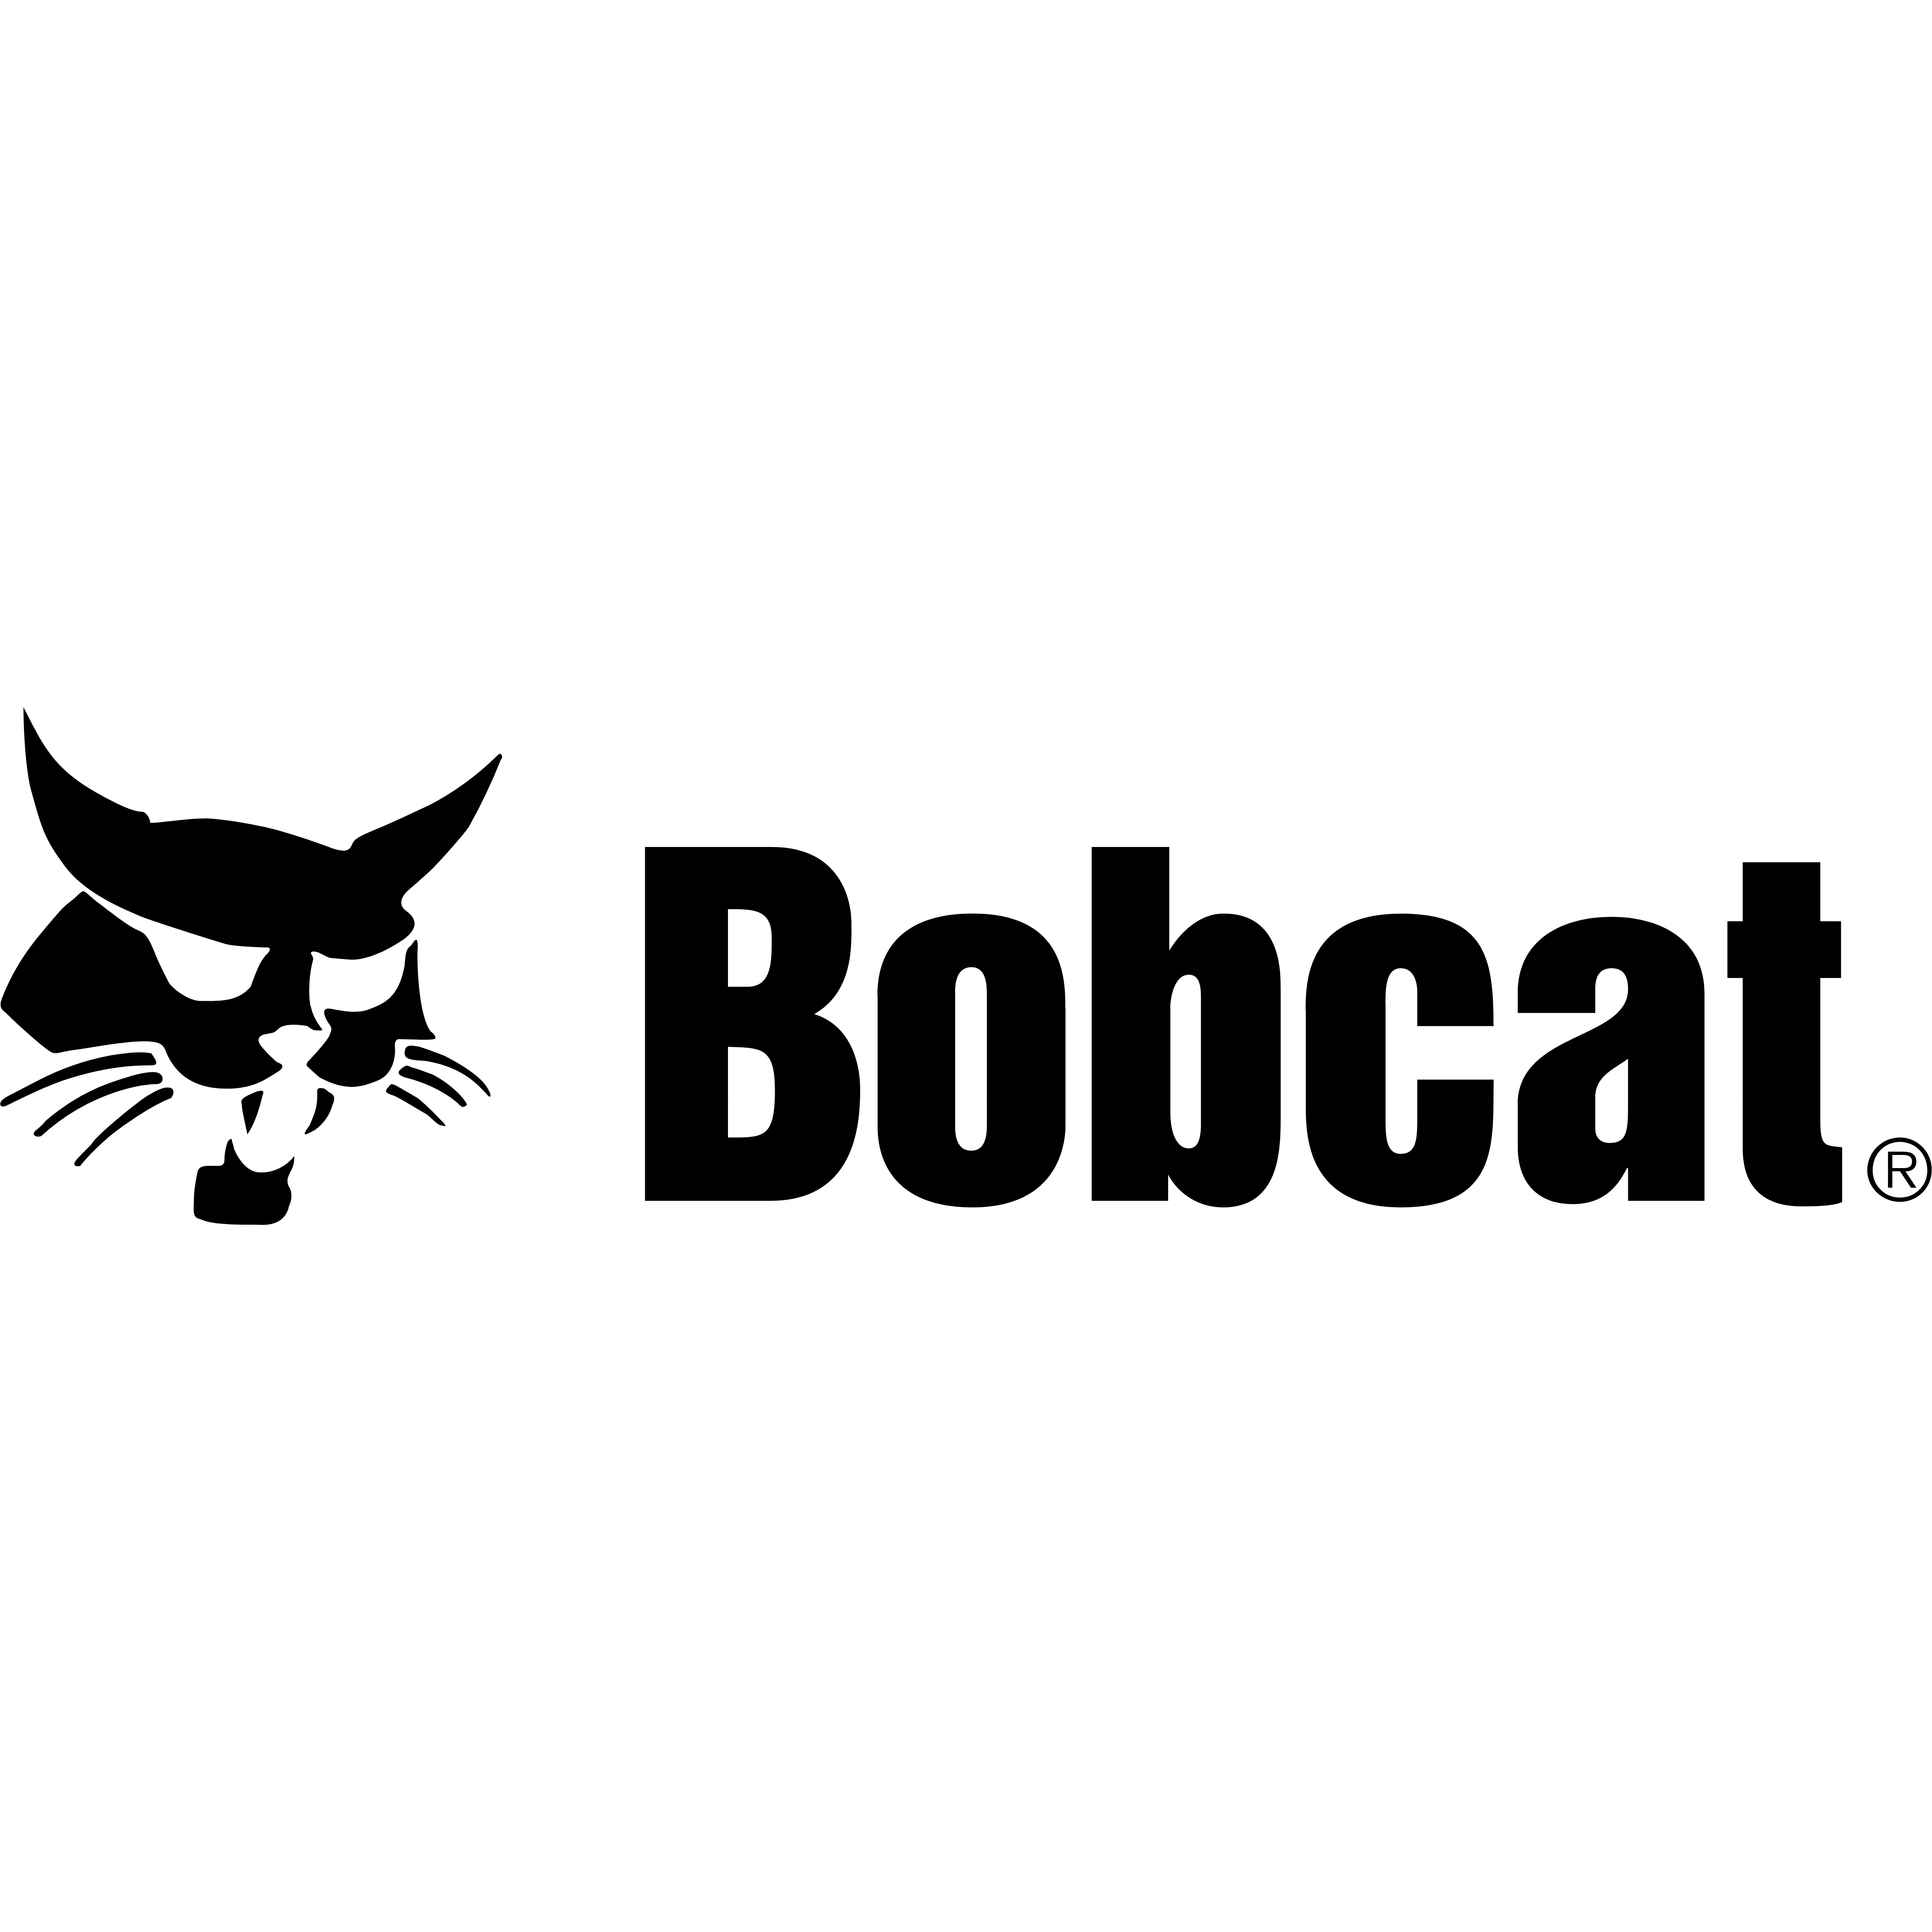 Bobcat of the Peace